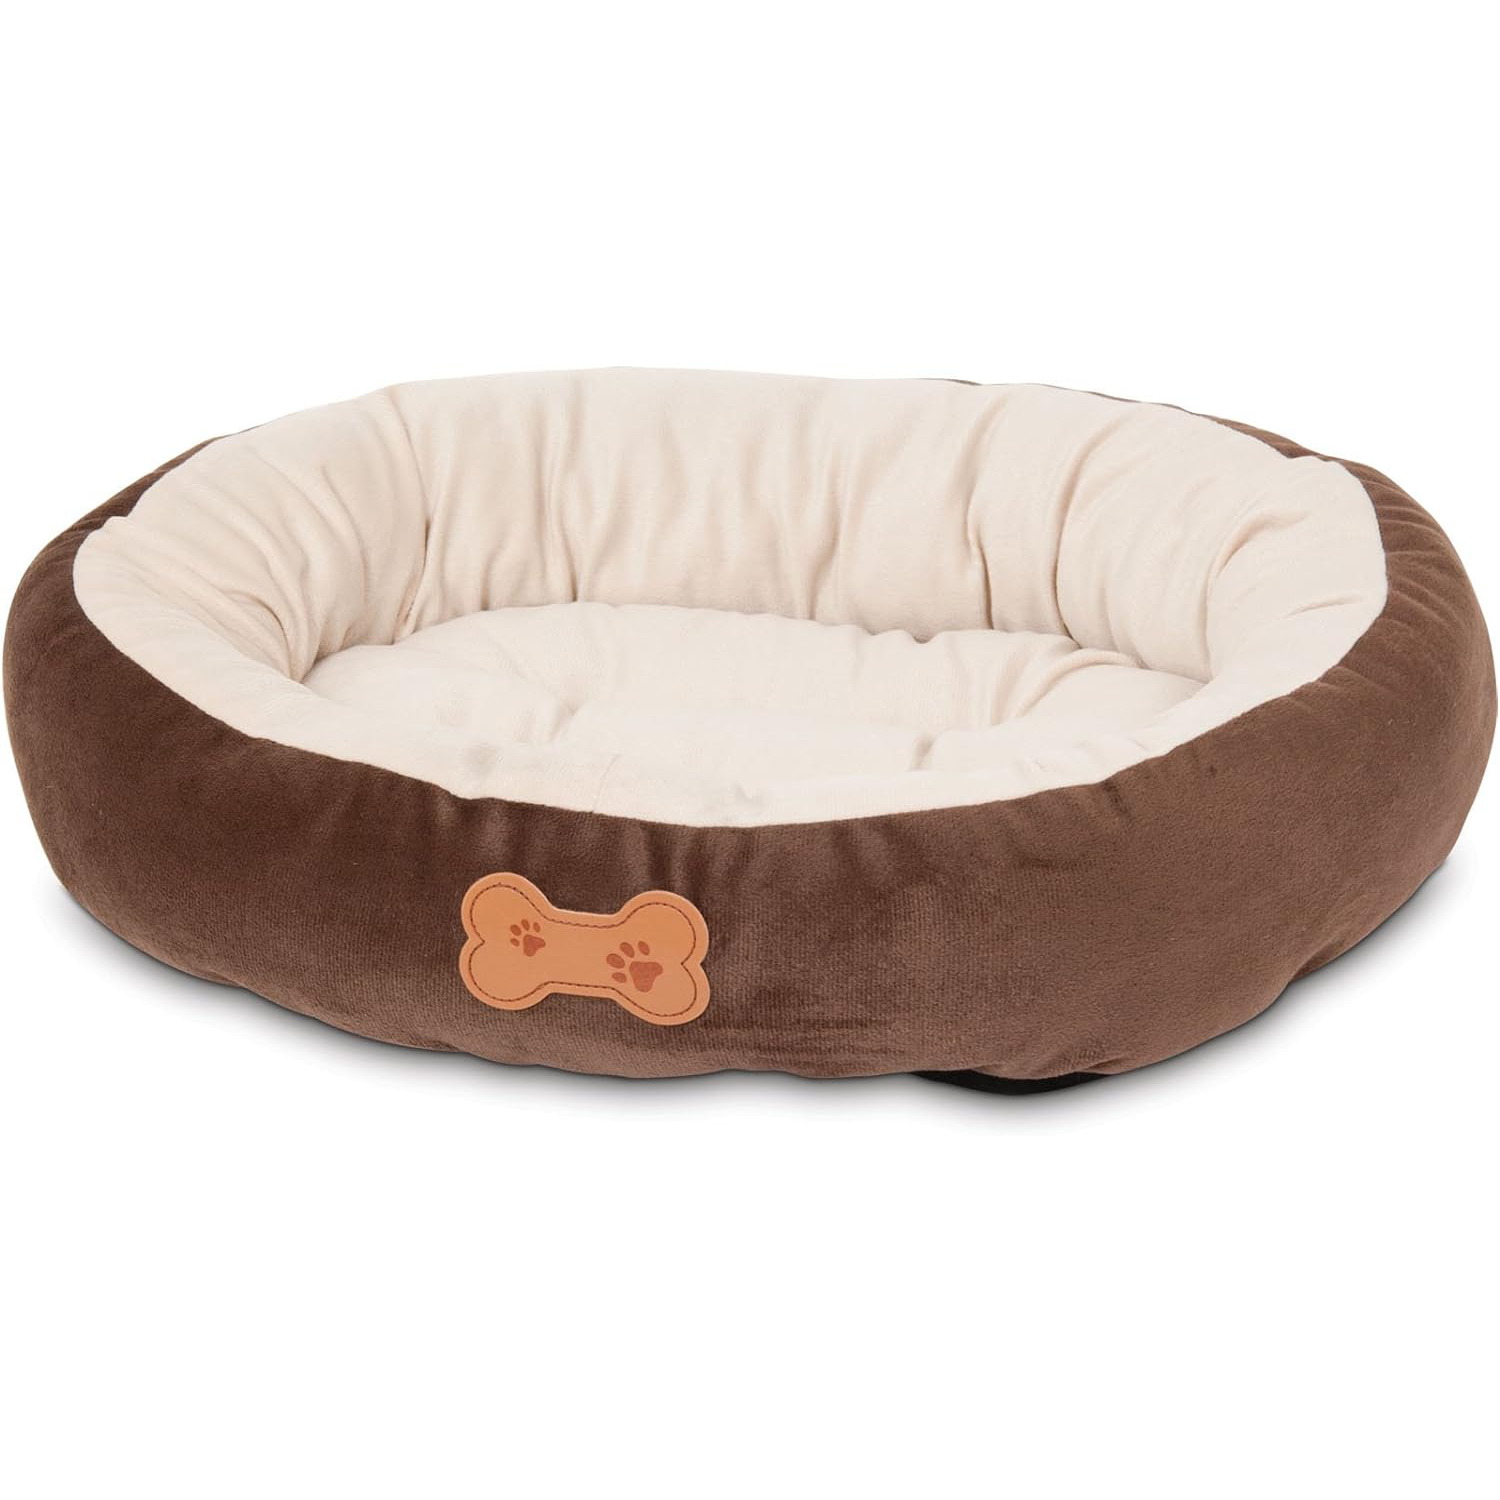 Petmate 290206 Aspen Pet Oval Cuddler Pet Bed, 20_ x 16_, Chocolate Brown new